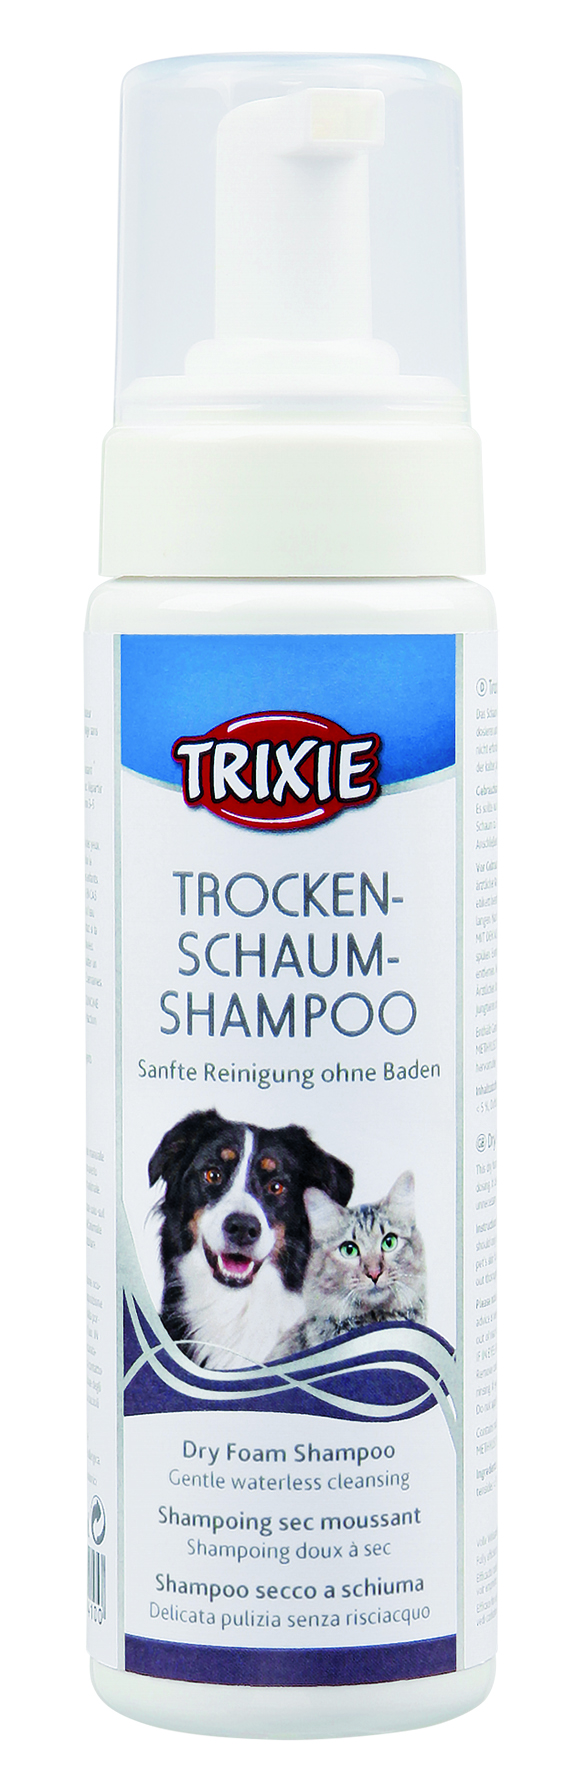 Trixie Trocken-Schaum-Shampoo, 230 ml